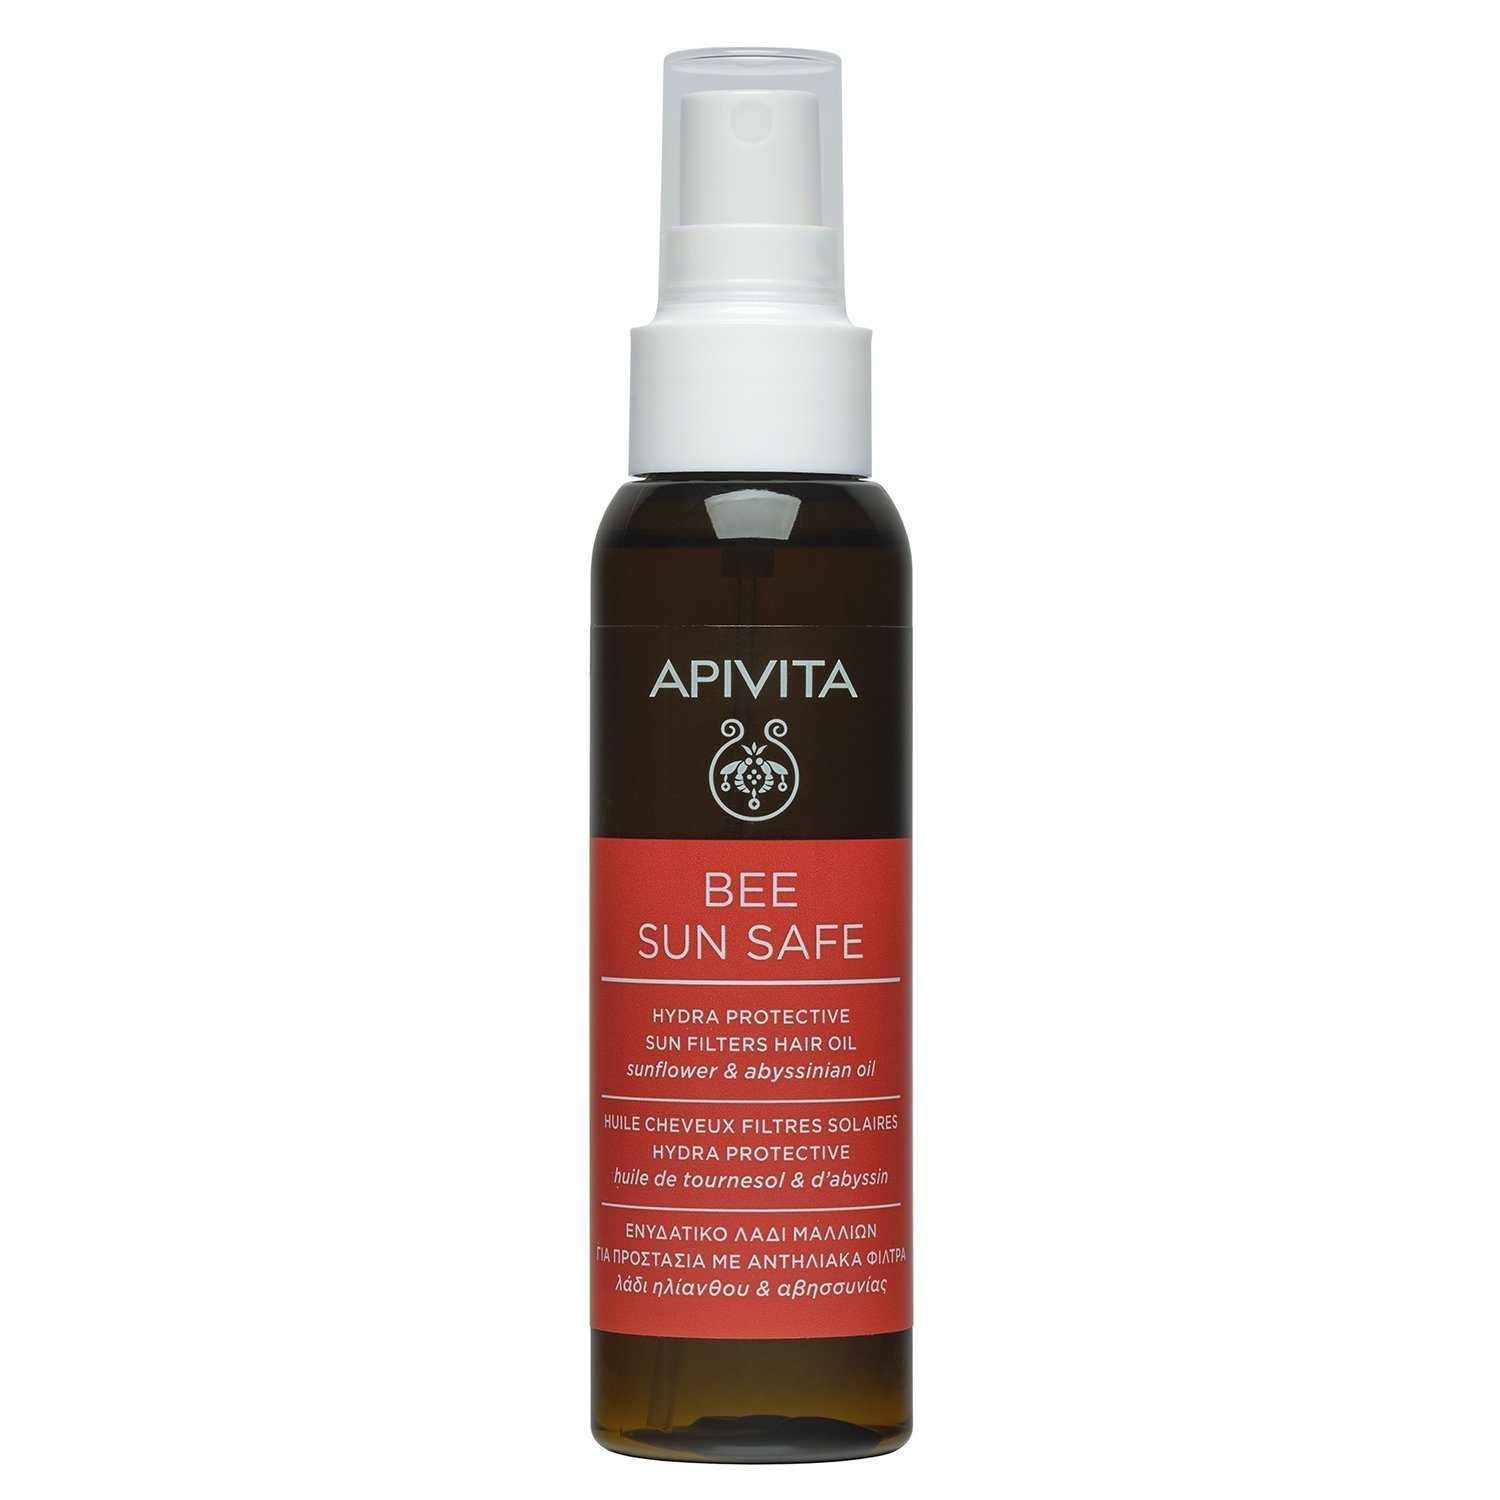 Apivita hair oil